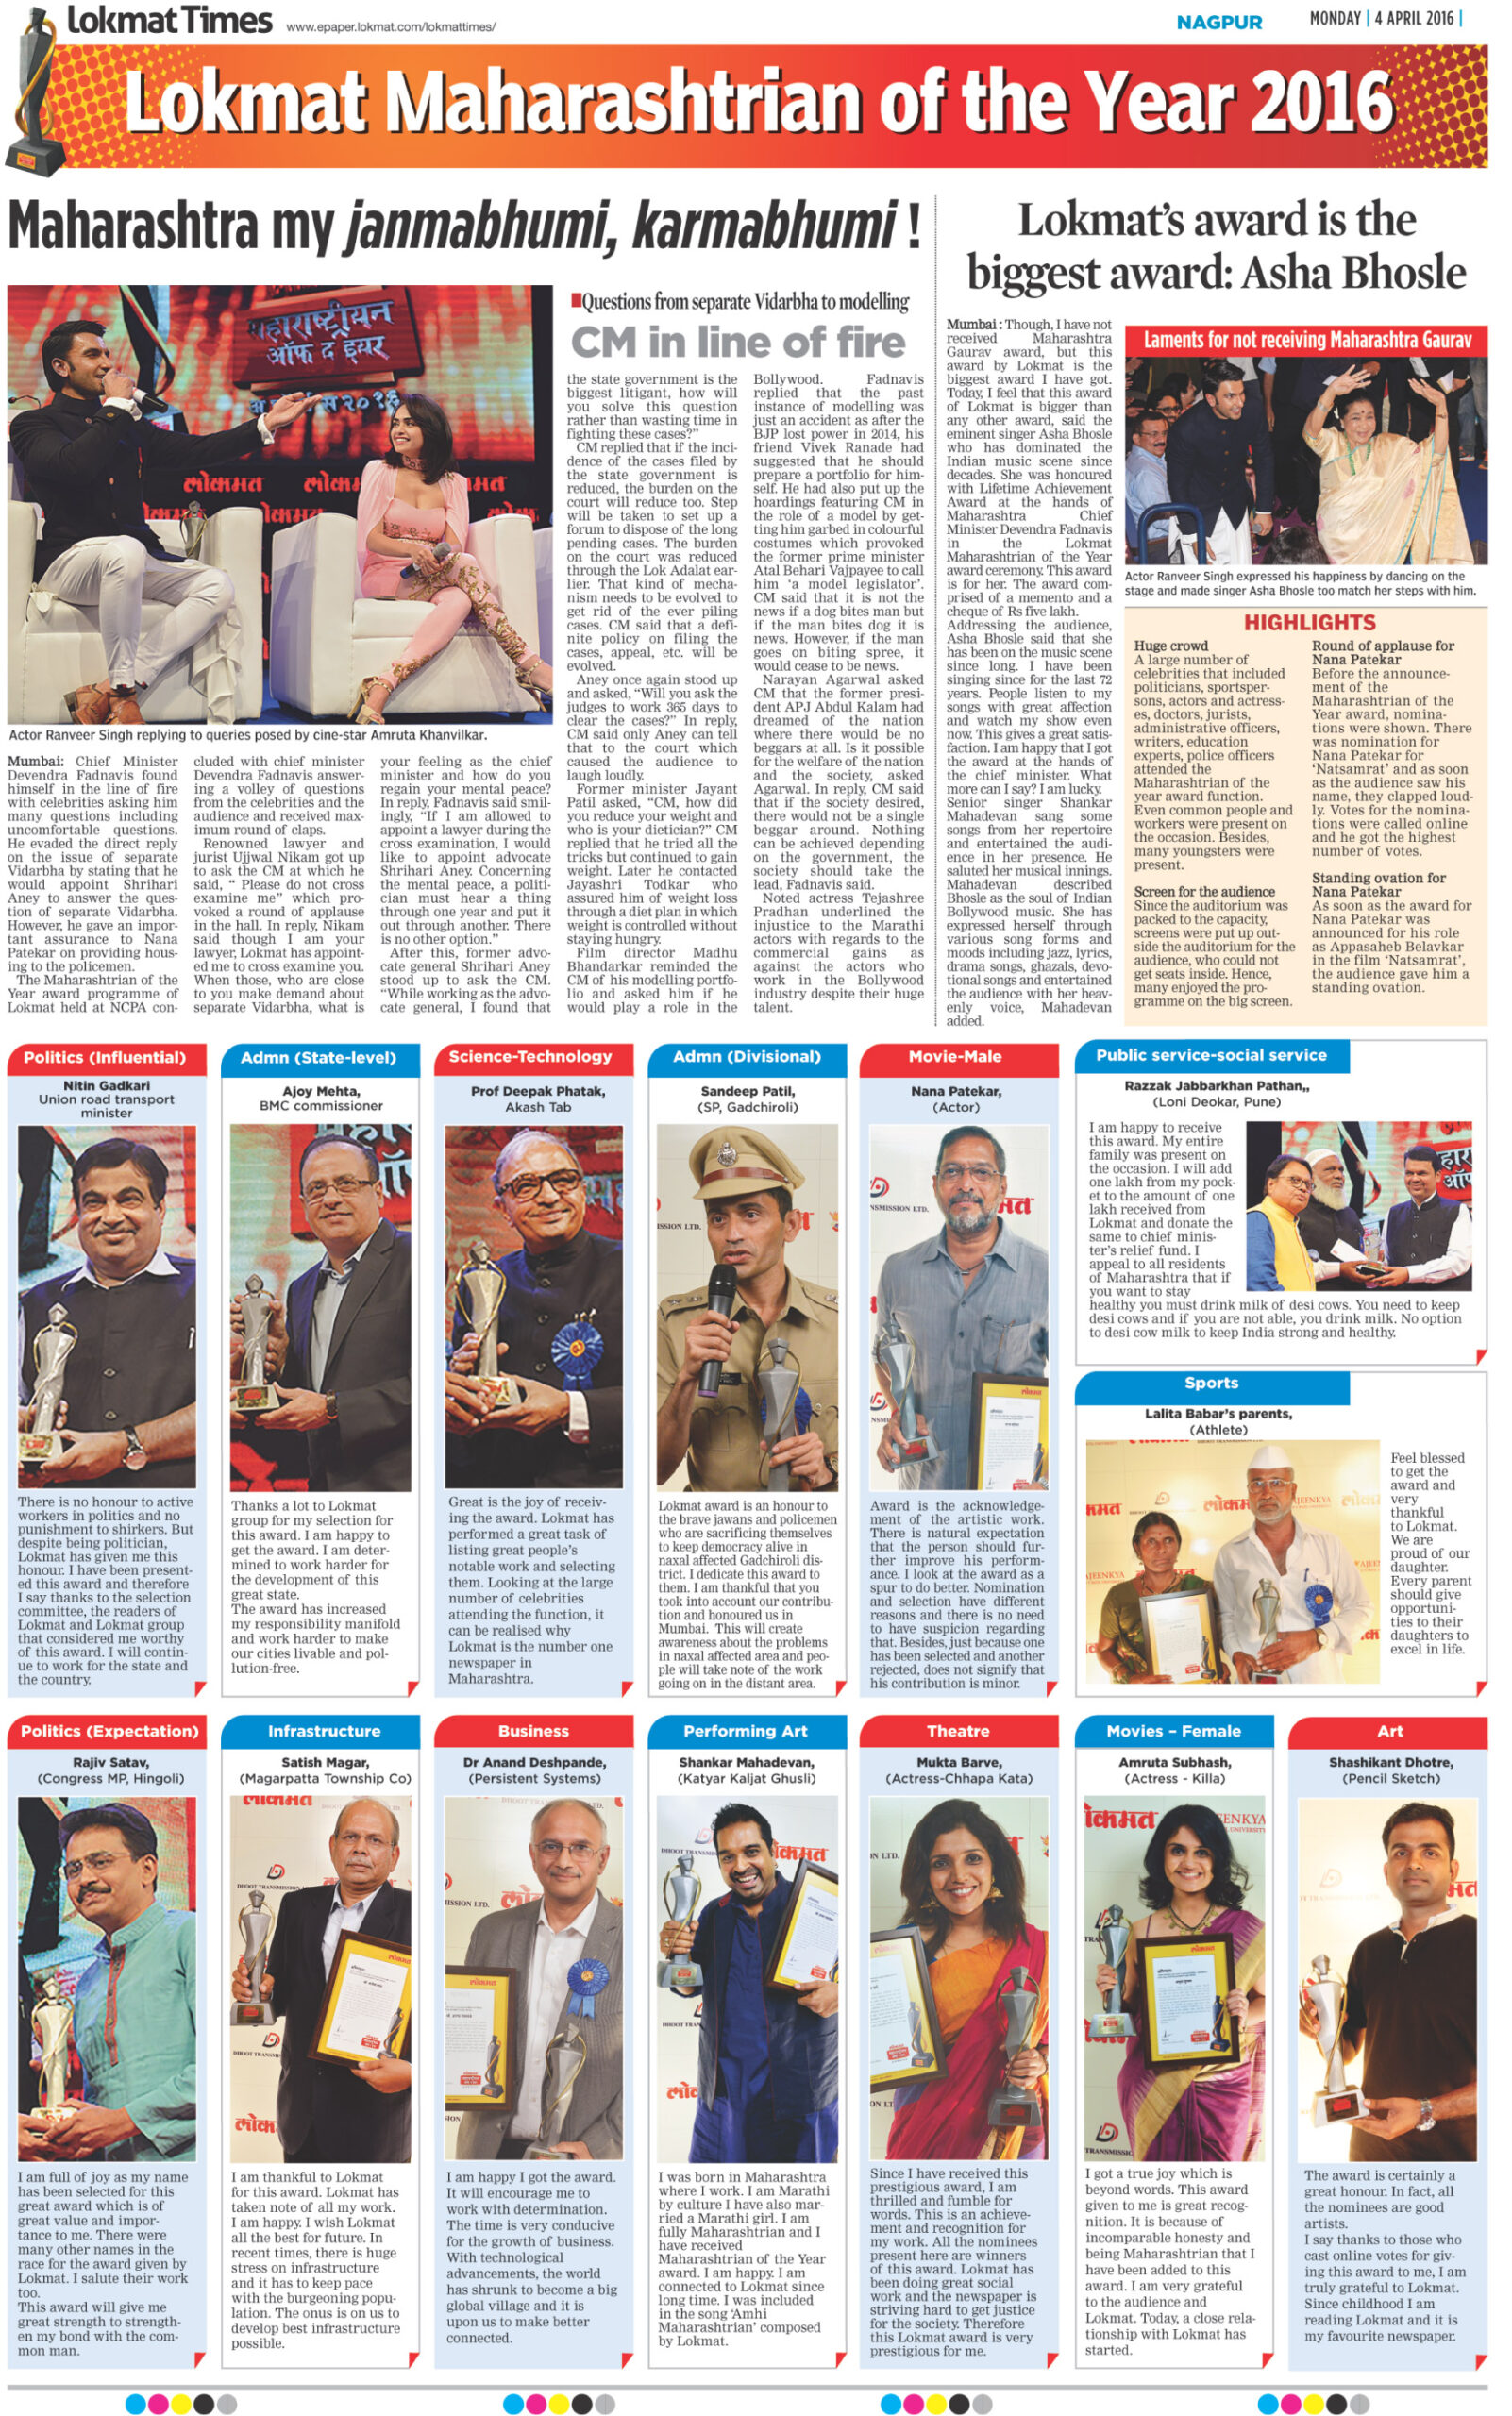 Lokmat’s award is the biggest award:Asha Bhosle